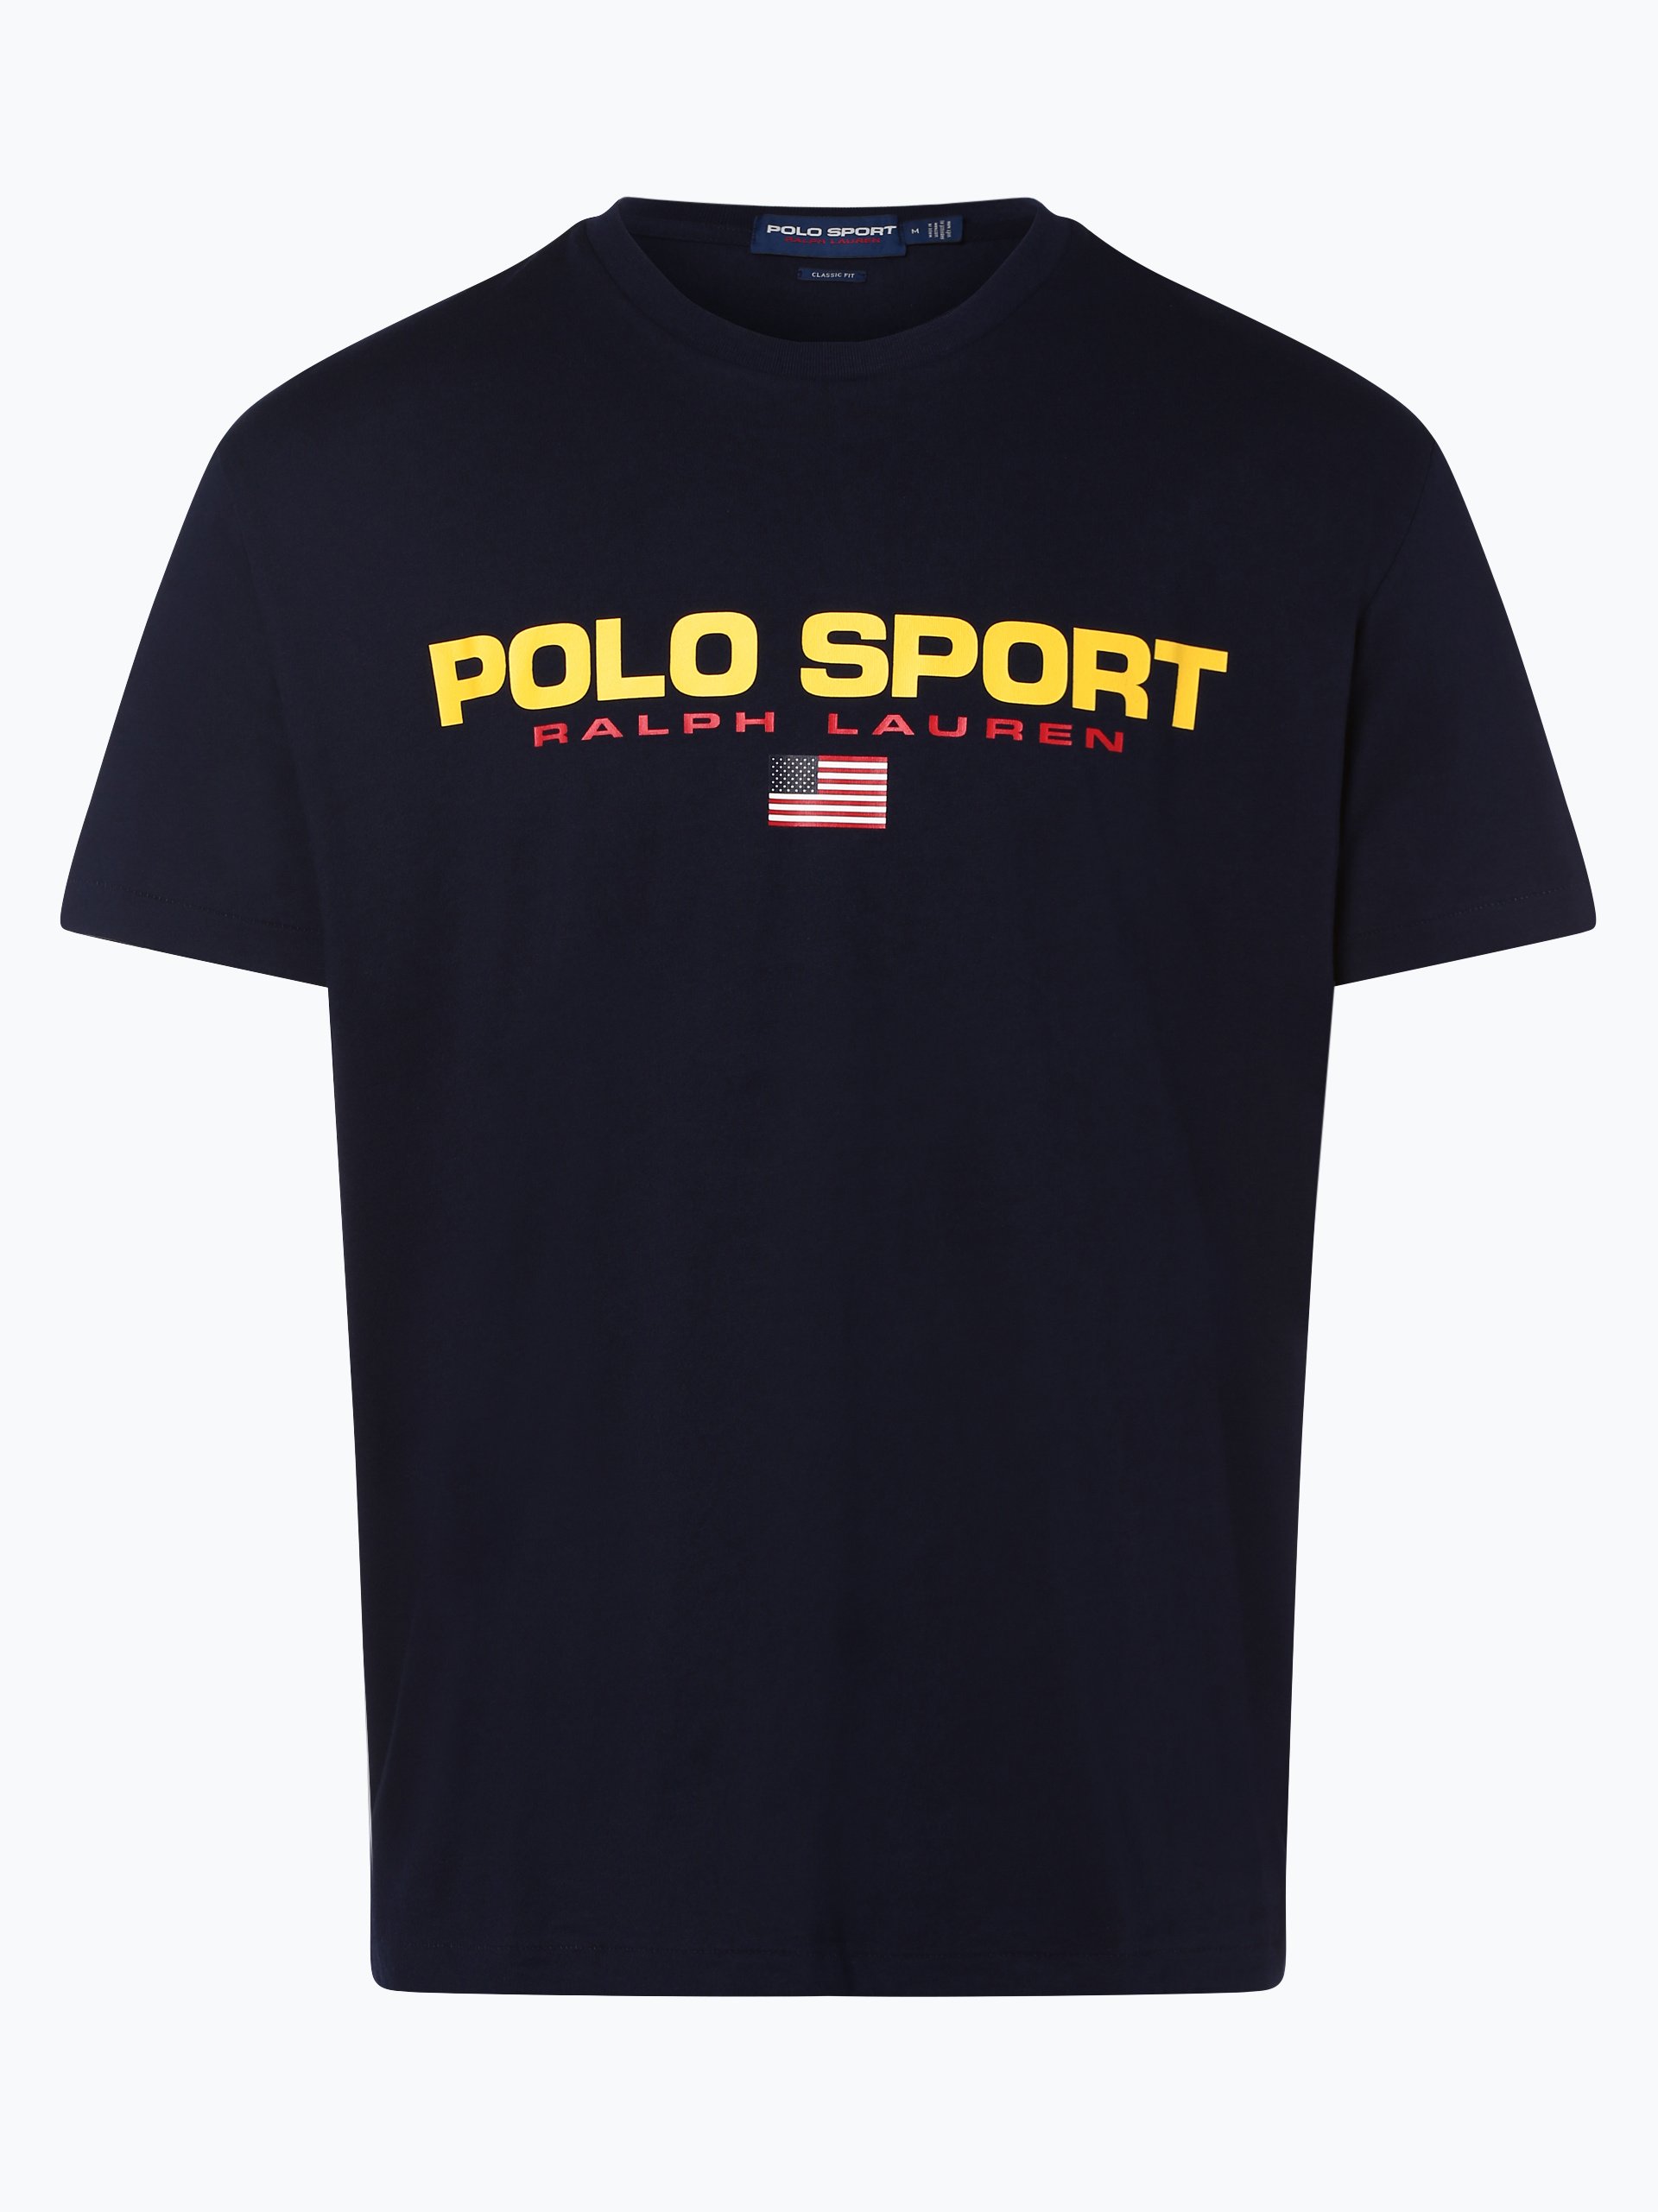 Polo ralph lauren t shirt herren sale at home instagram – Polo – Shop ...